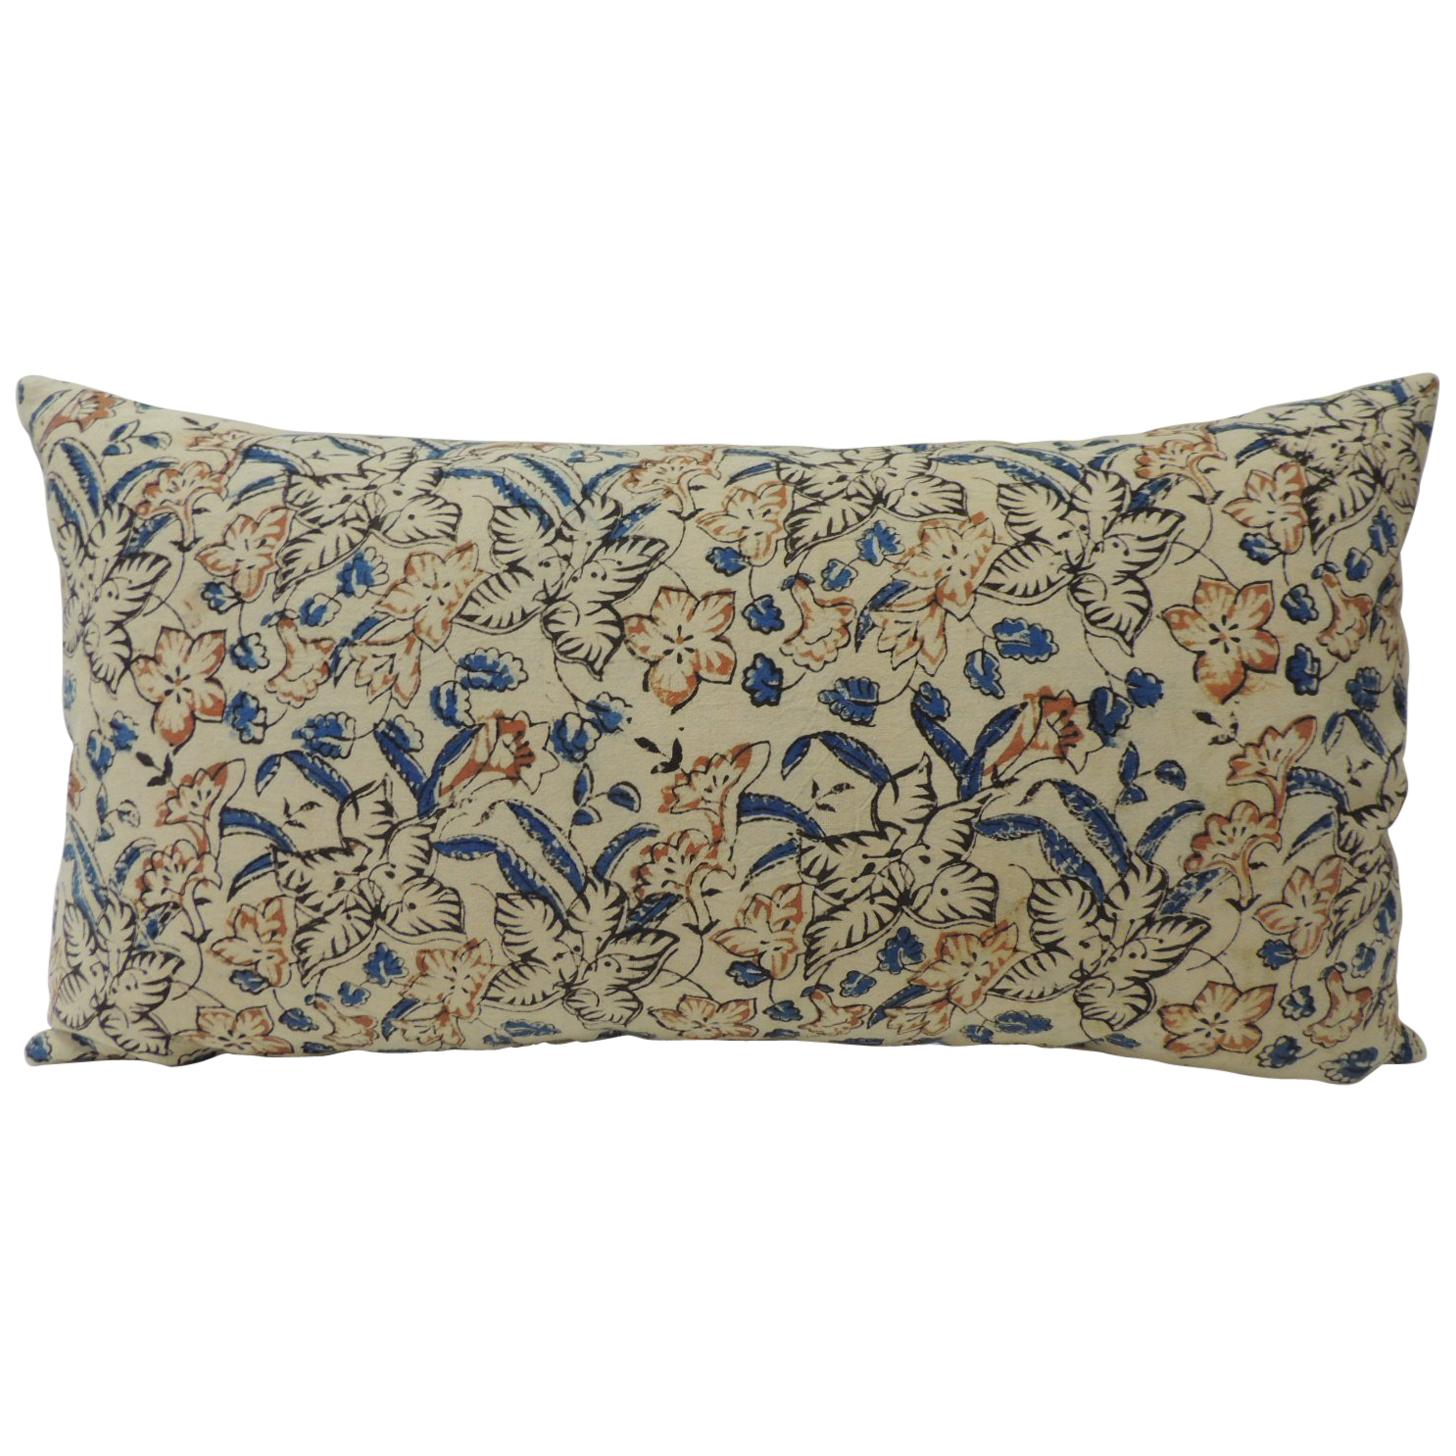 Vintage Indian Hand-Blocked Artisanal Textile Decorative Long Bolster Pillow